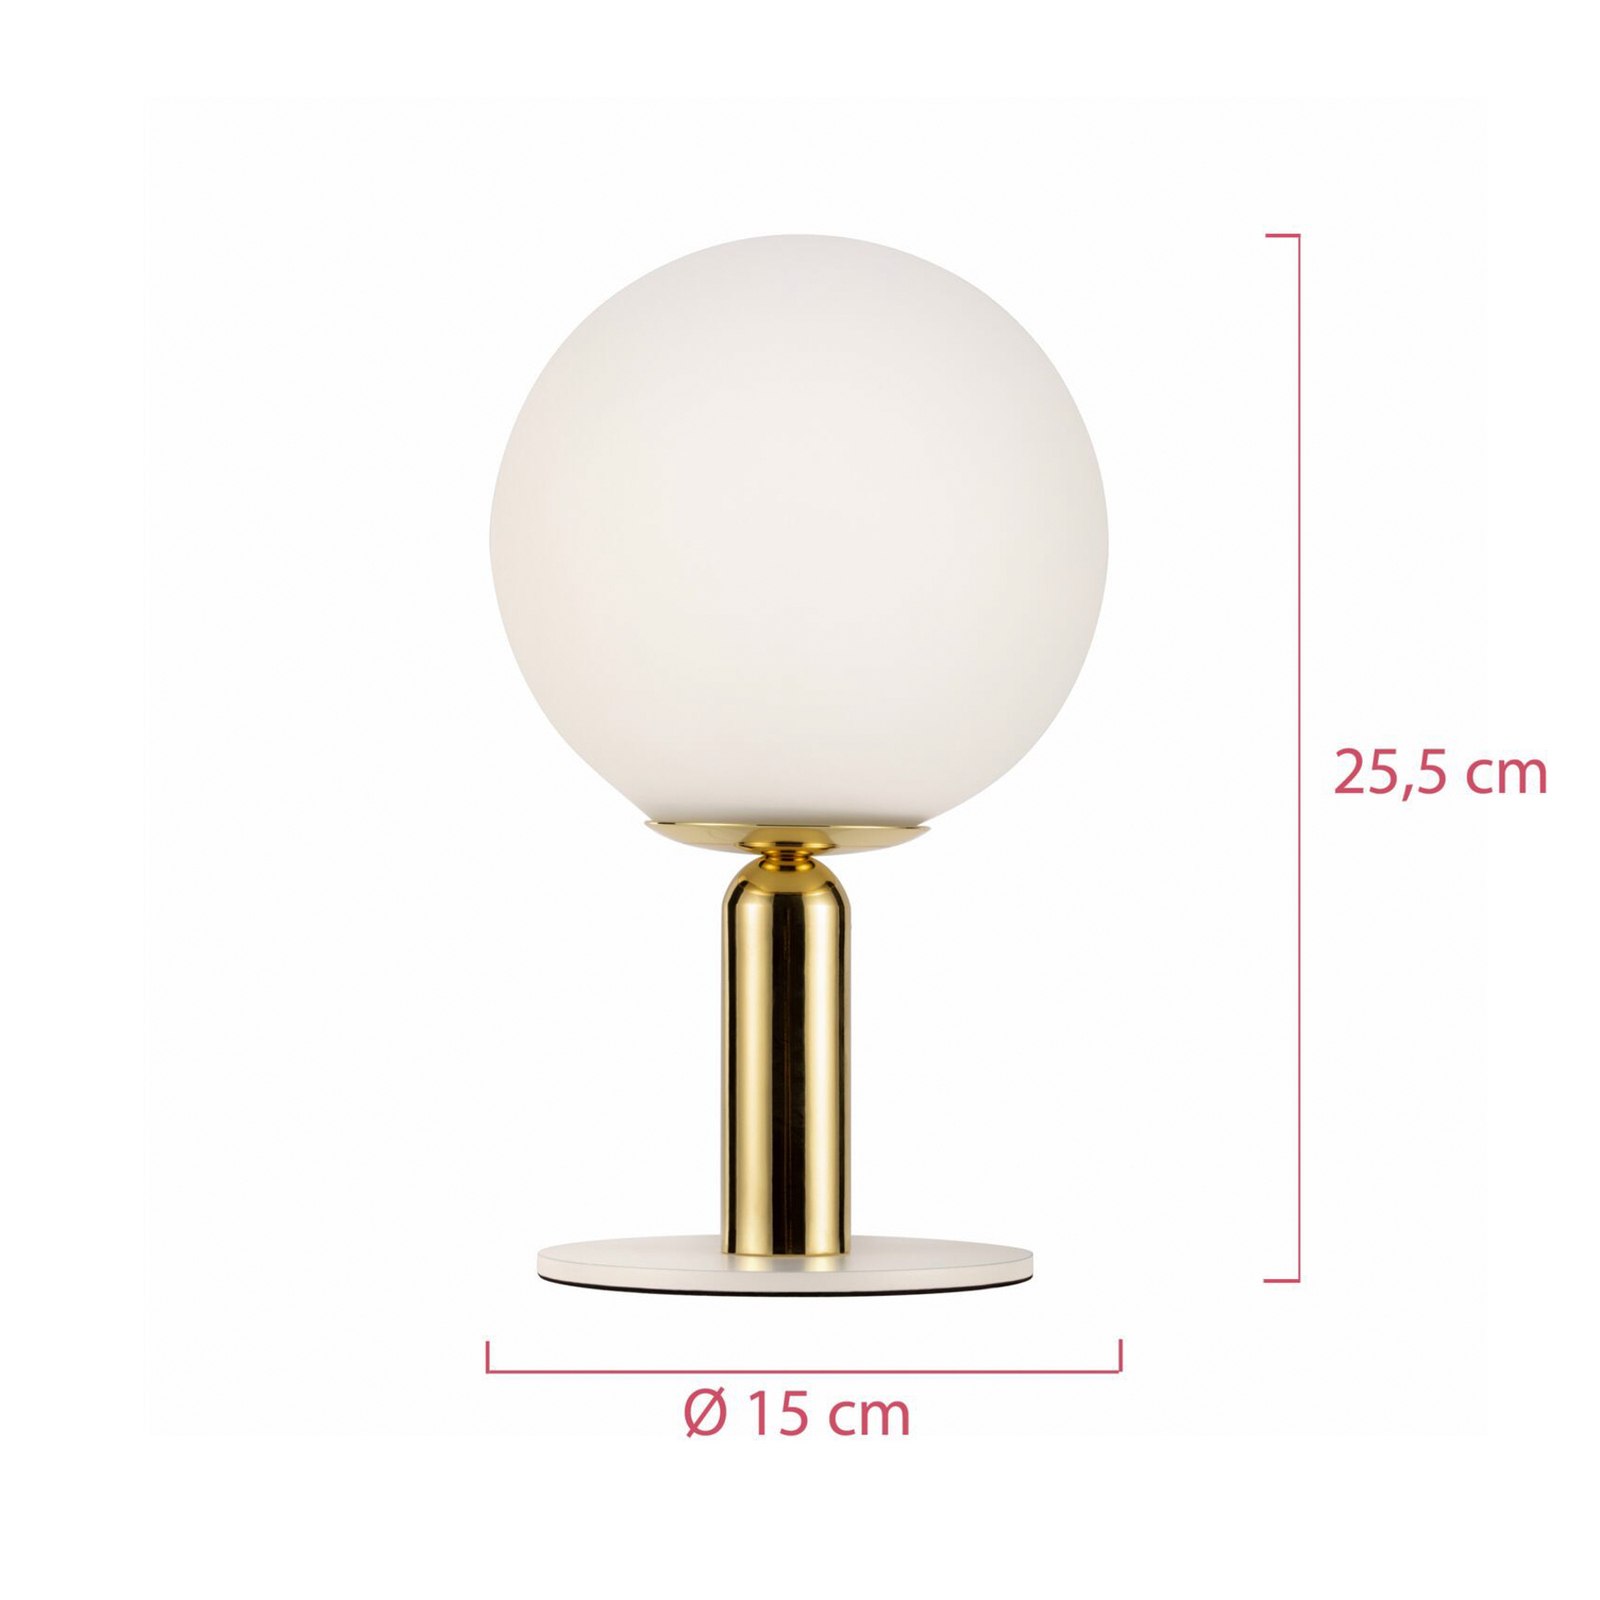 Pauleen Splendid Pearl bordslampa med glaskula